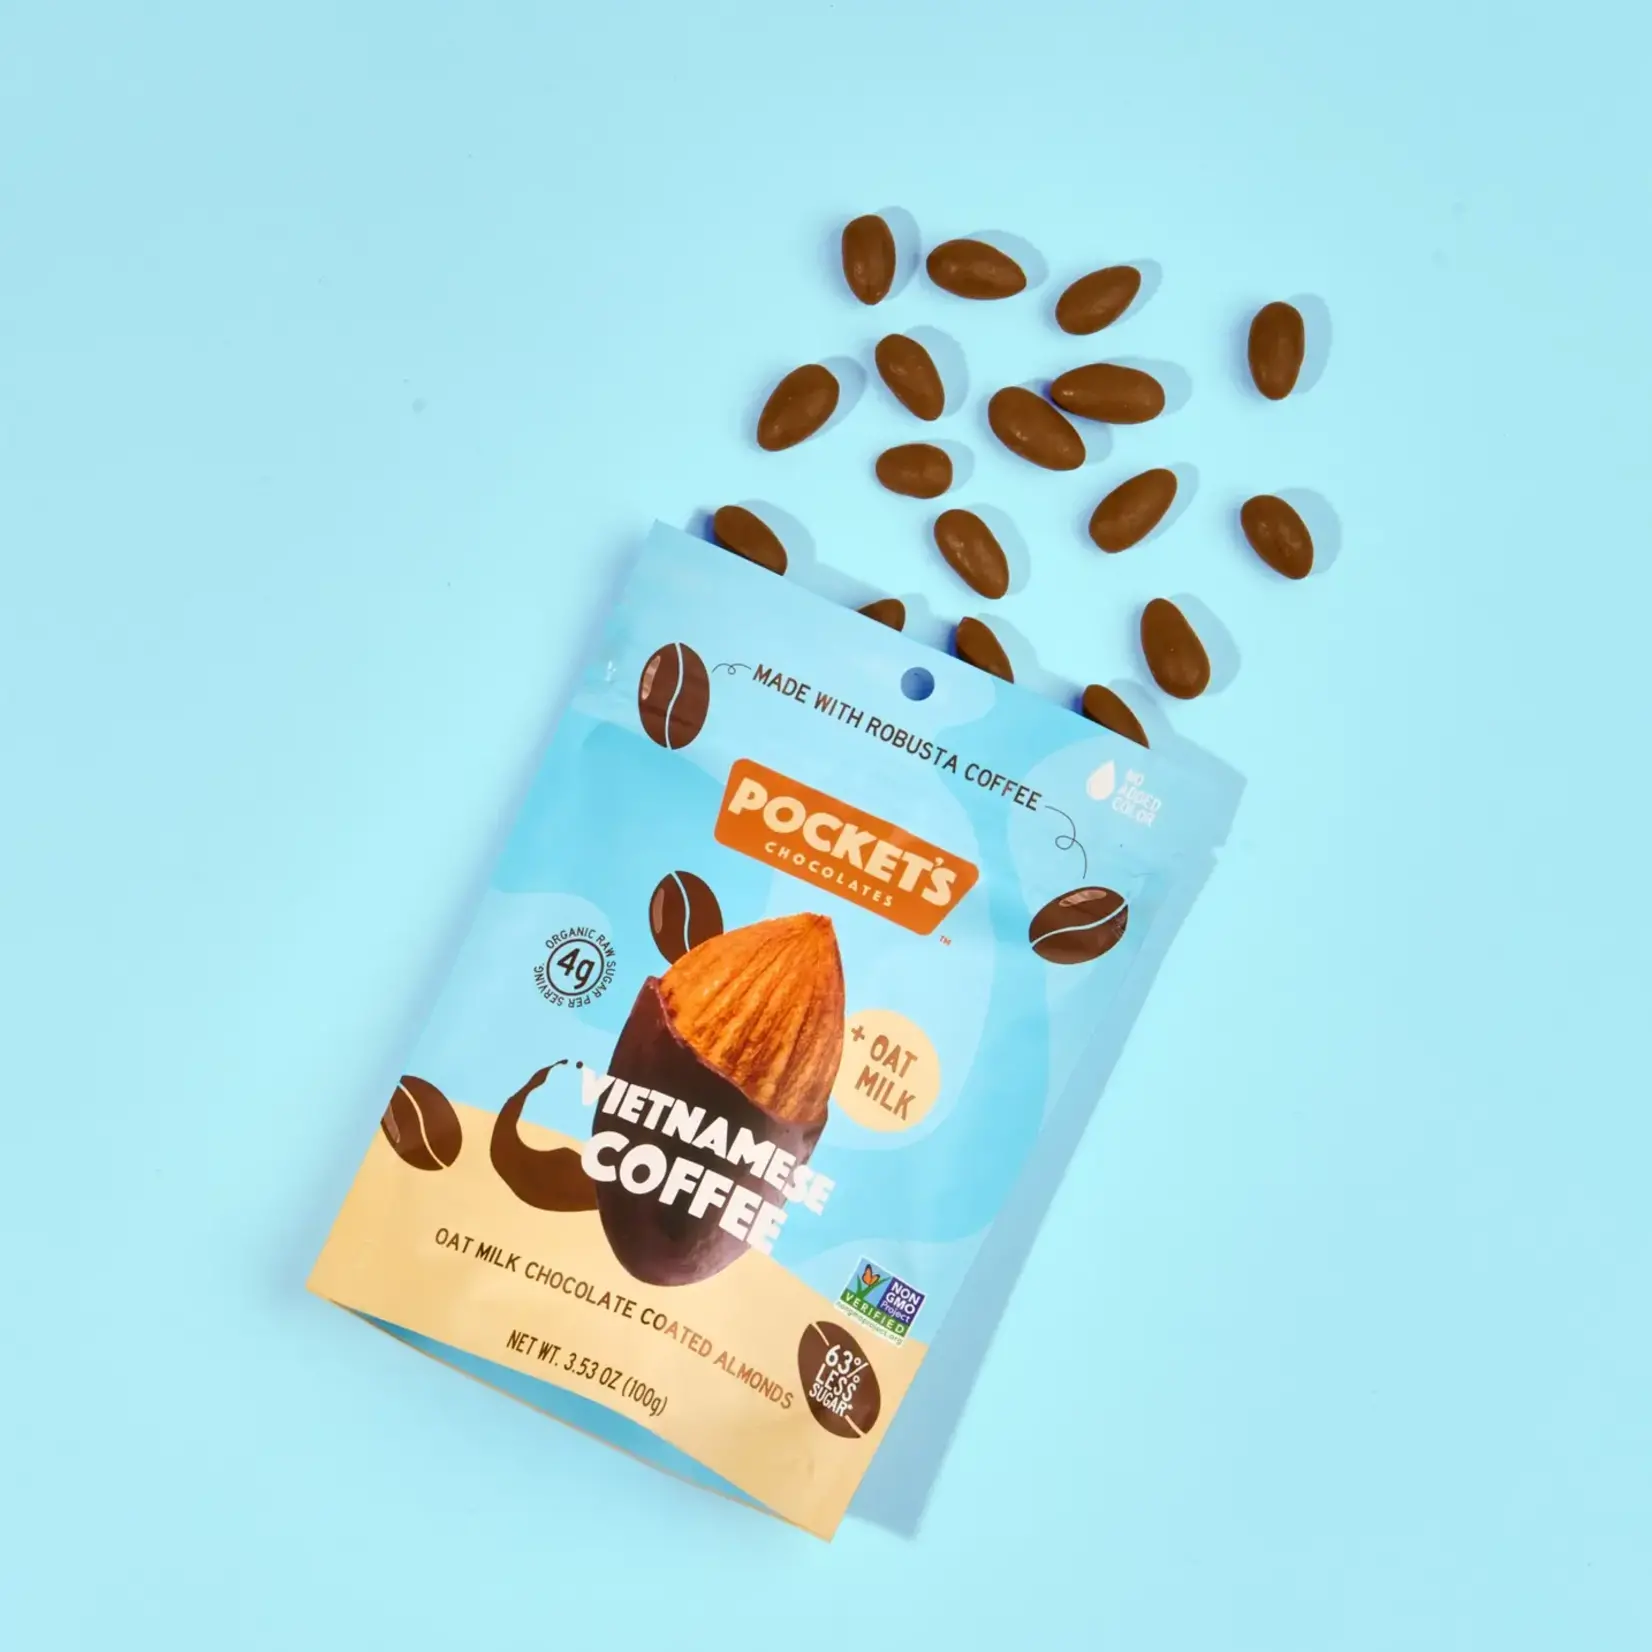 Pocket's Chocolates Chocolate Almond Pouch